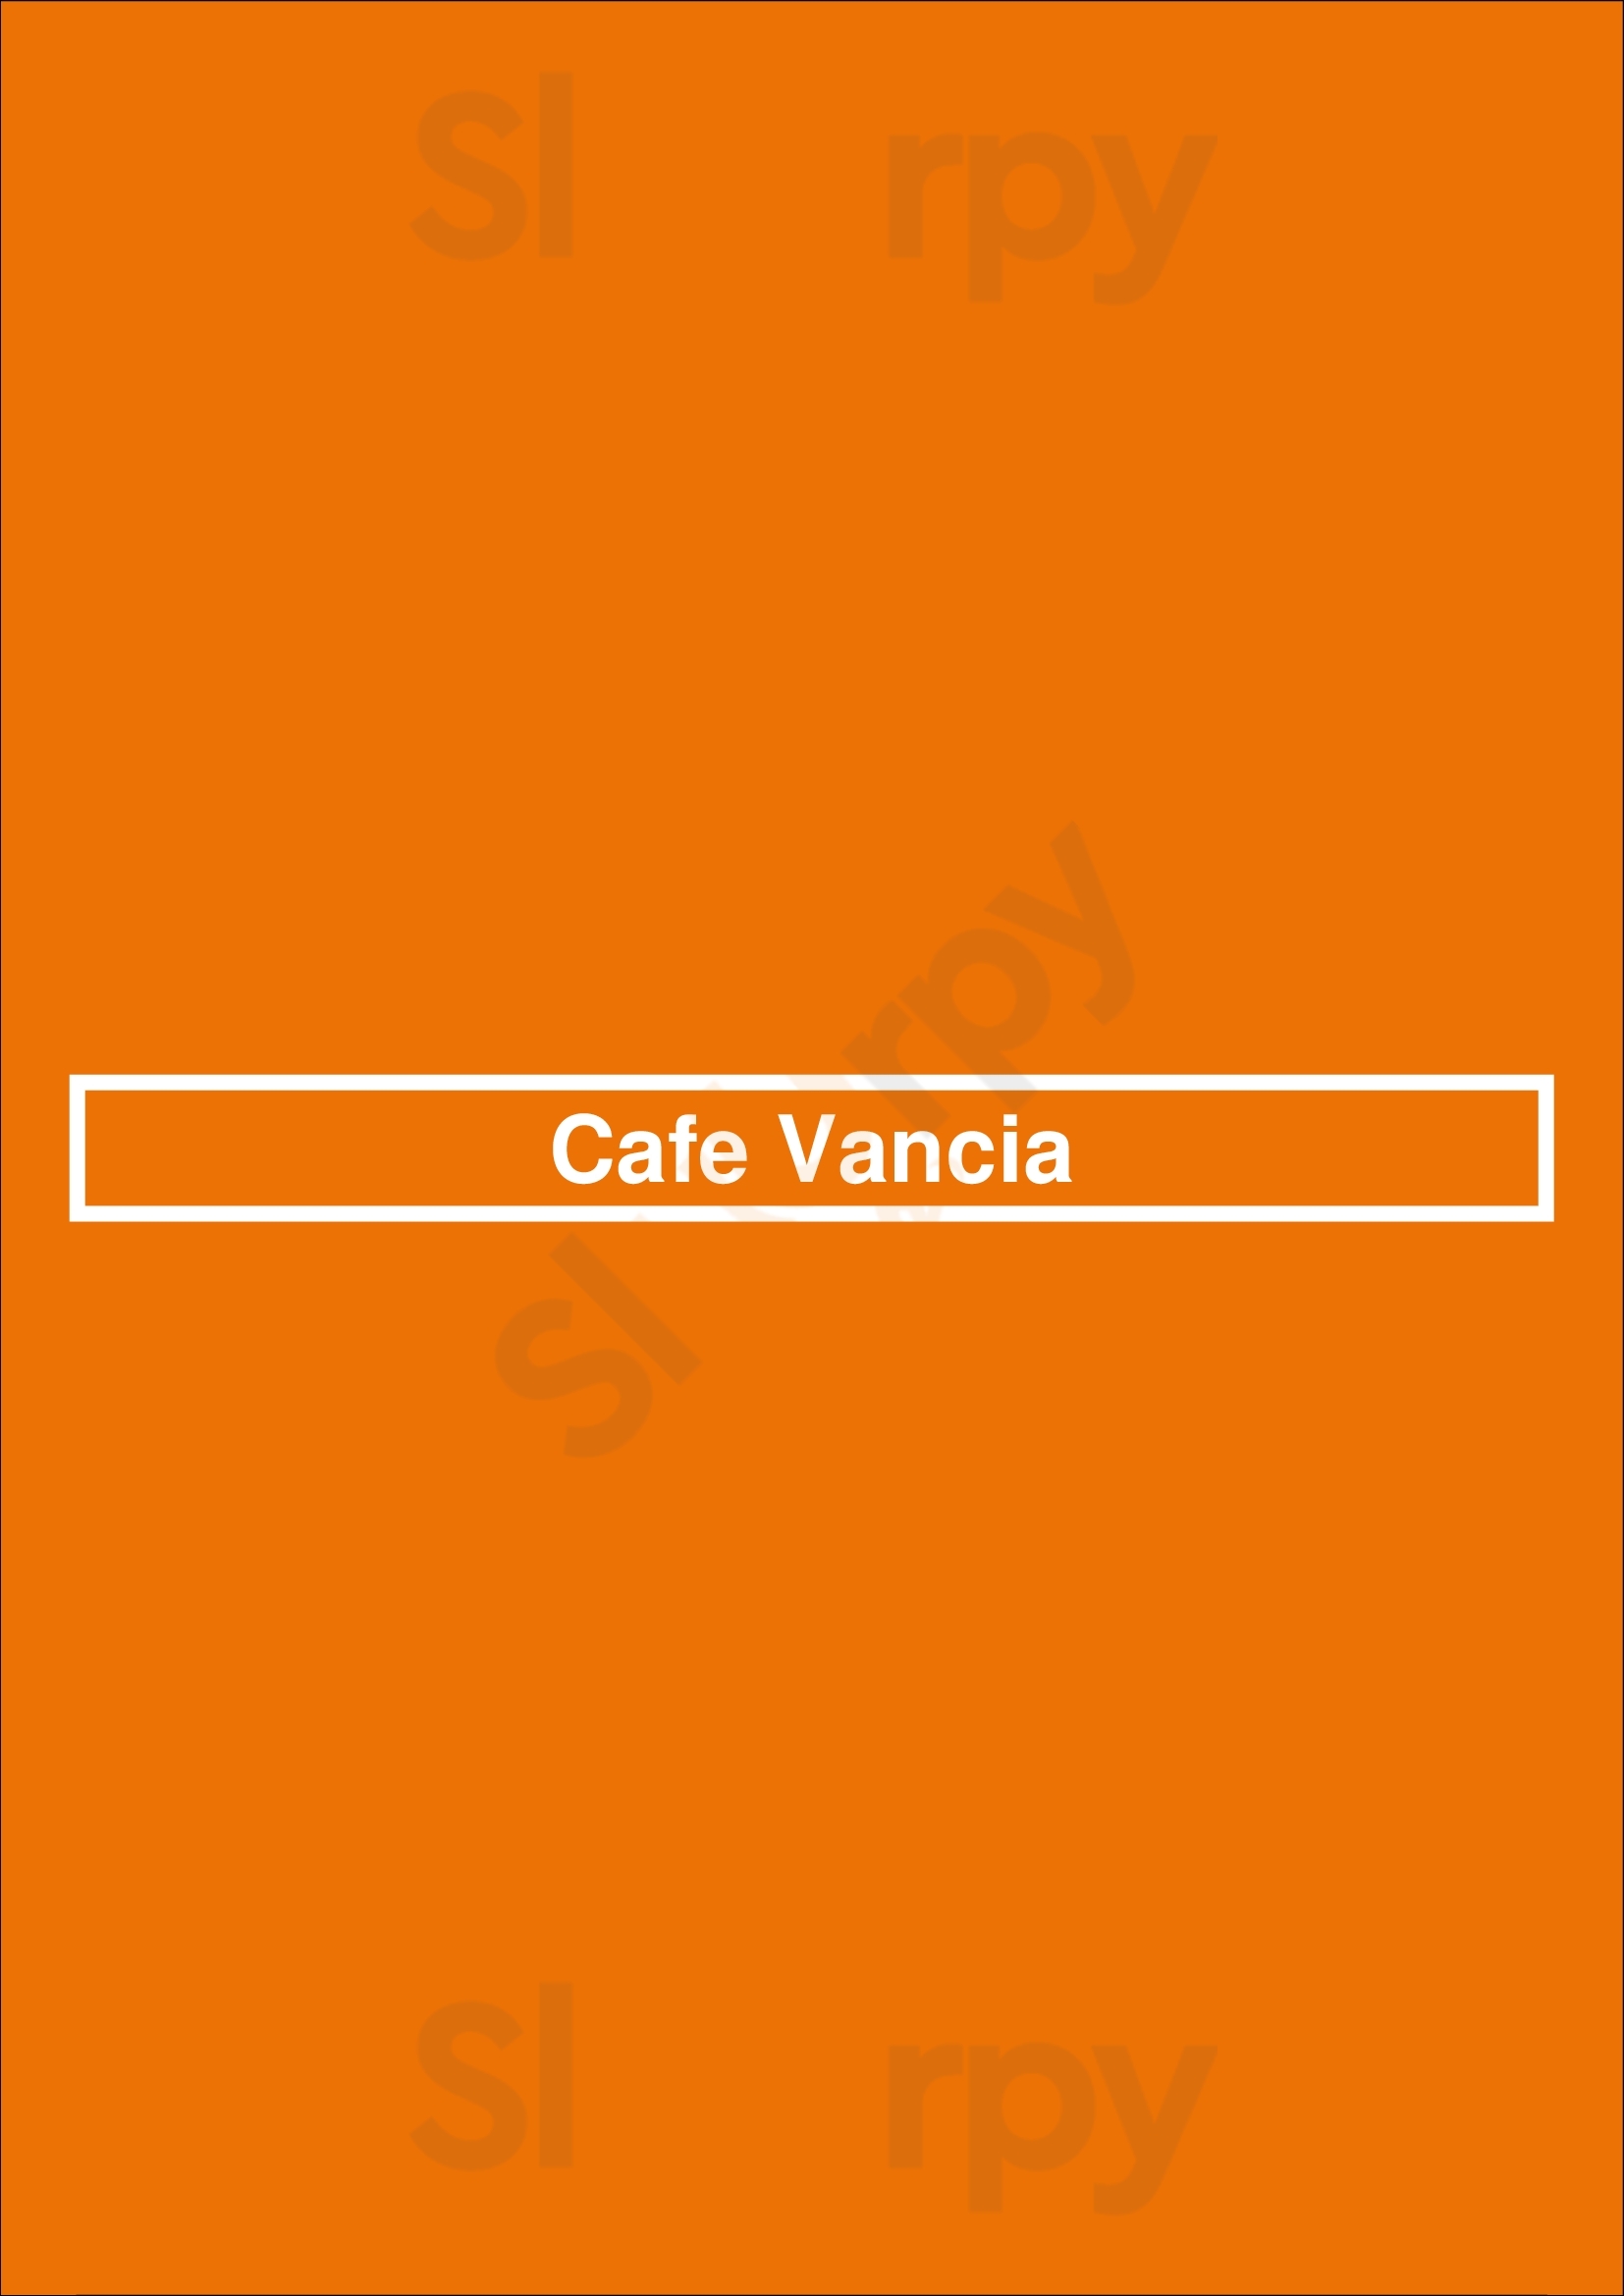 Cafe Vancia Edmonton Menu - 1